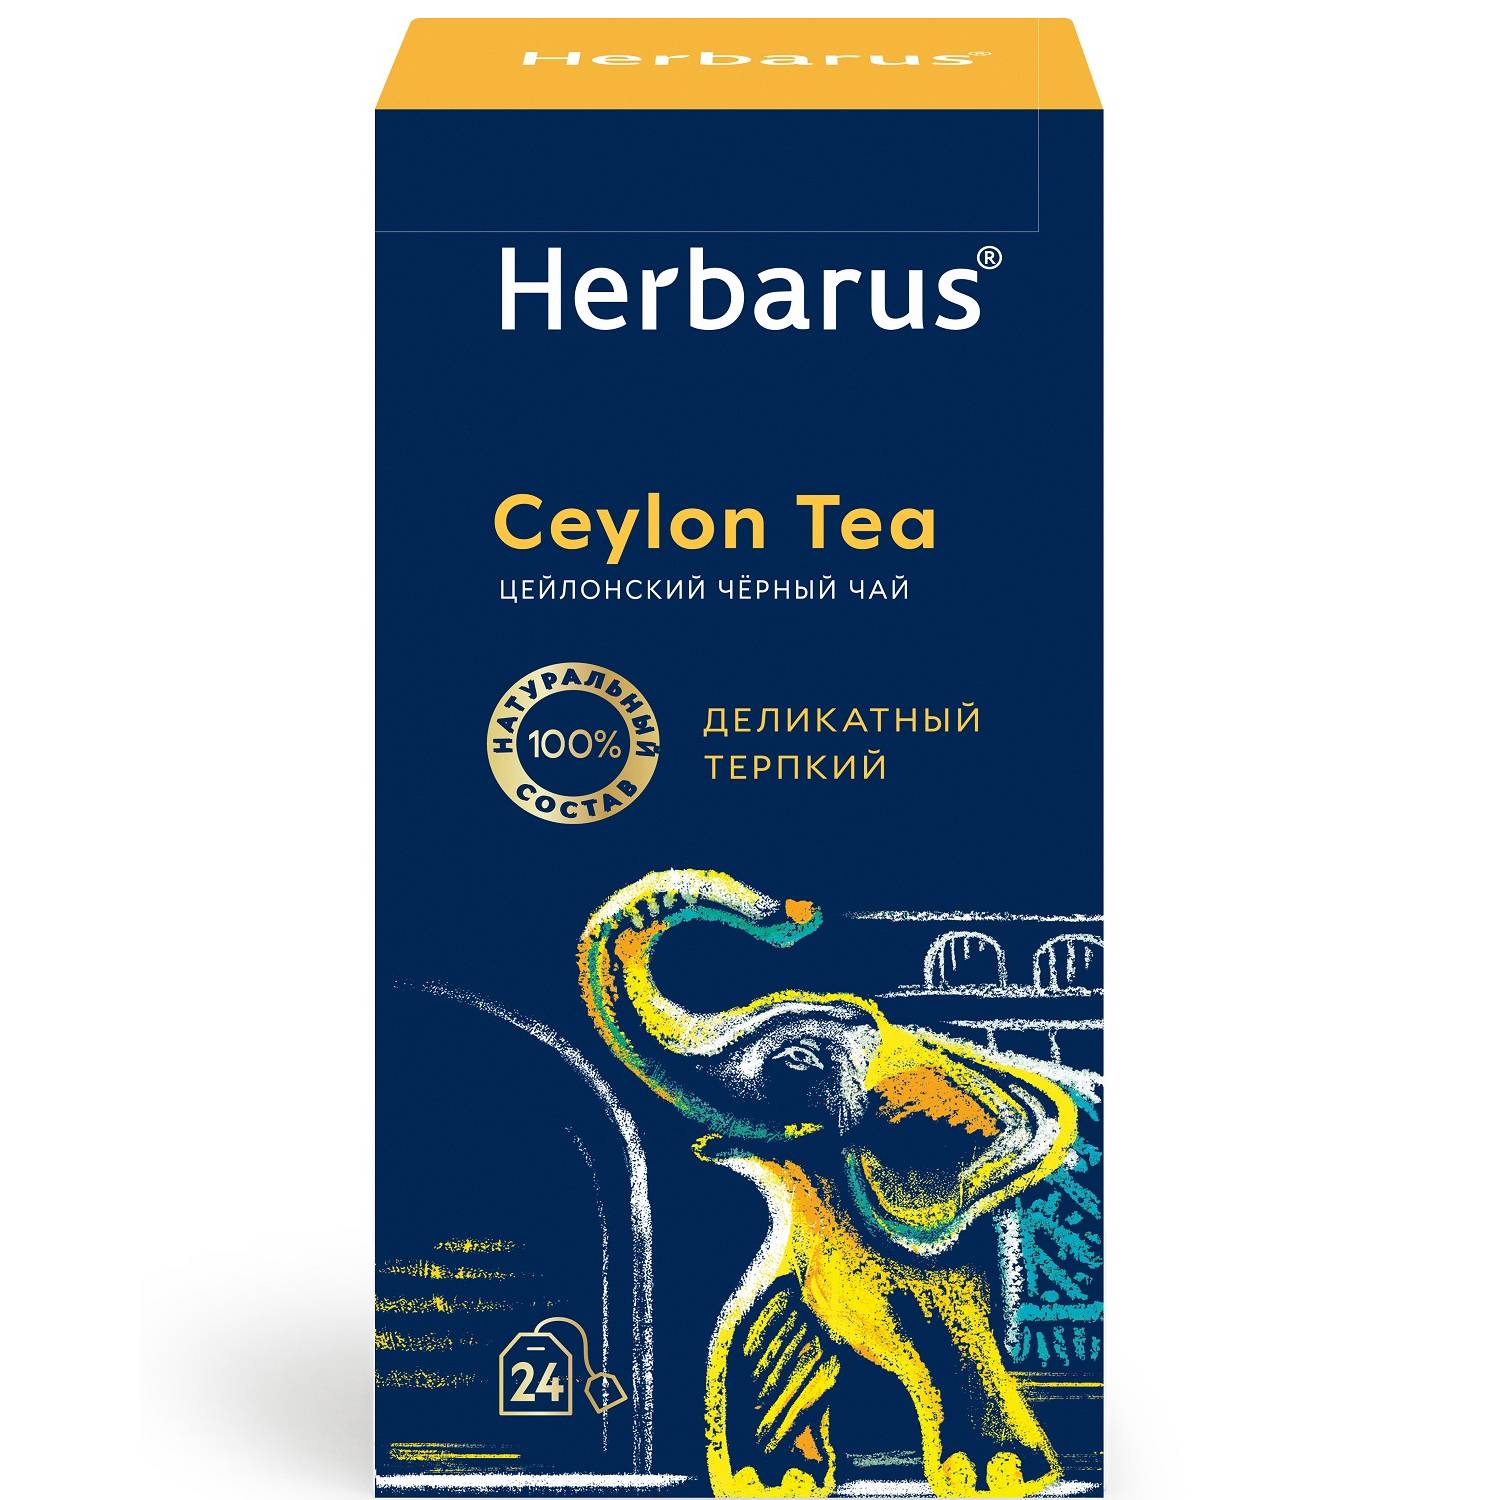 Herbarus Цейлонский черный чай Ceylon Tea, 24 пакетика х 2 г (Herbarus, Классический чай) herbarus чай черный с добавками сладкий восточный 24 х 2 г herbarus чай с добавками